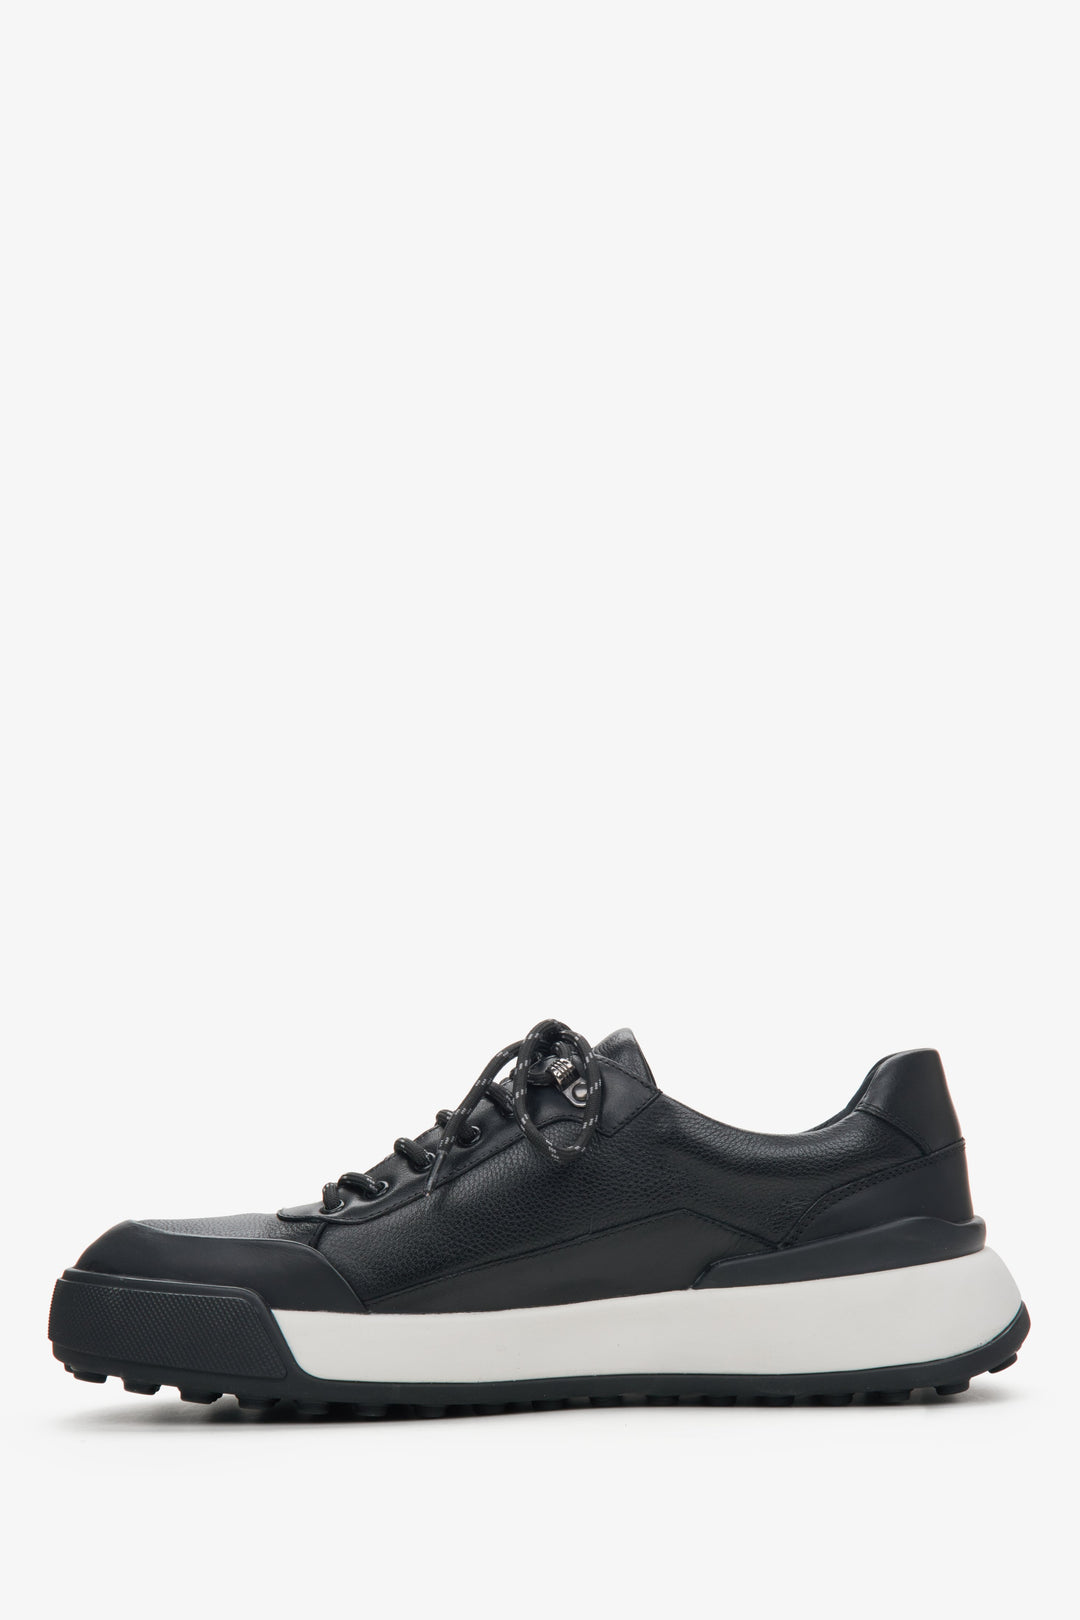 Men's black leather sneakers with a white stripe by Estro - shoe profile.